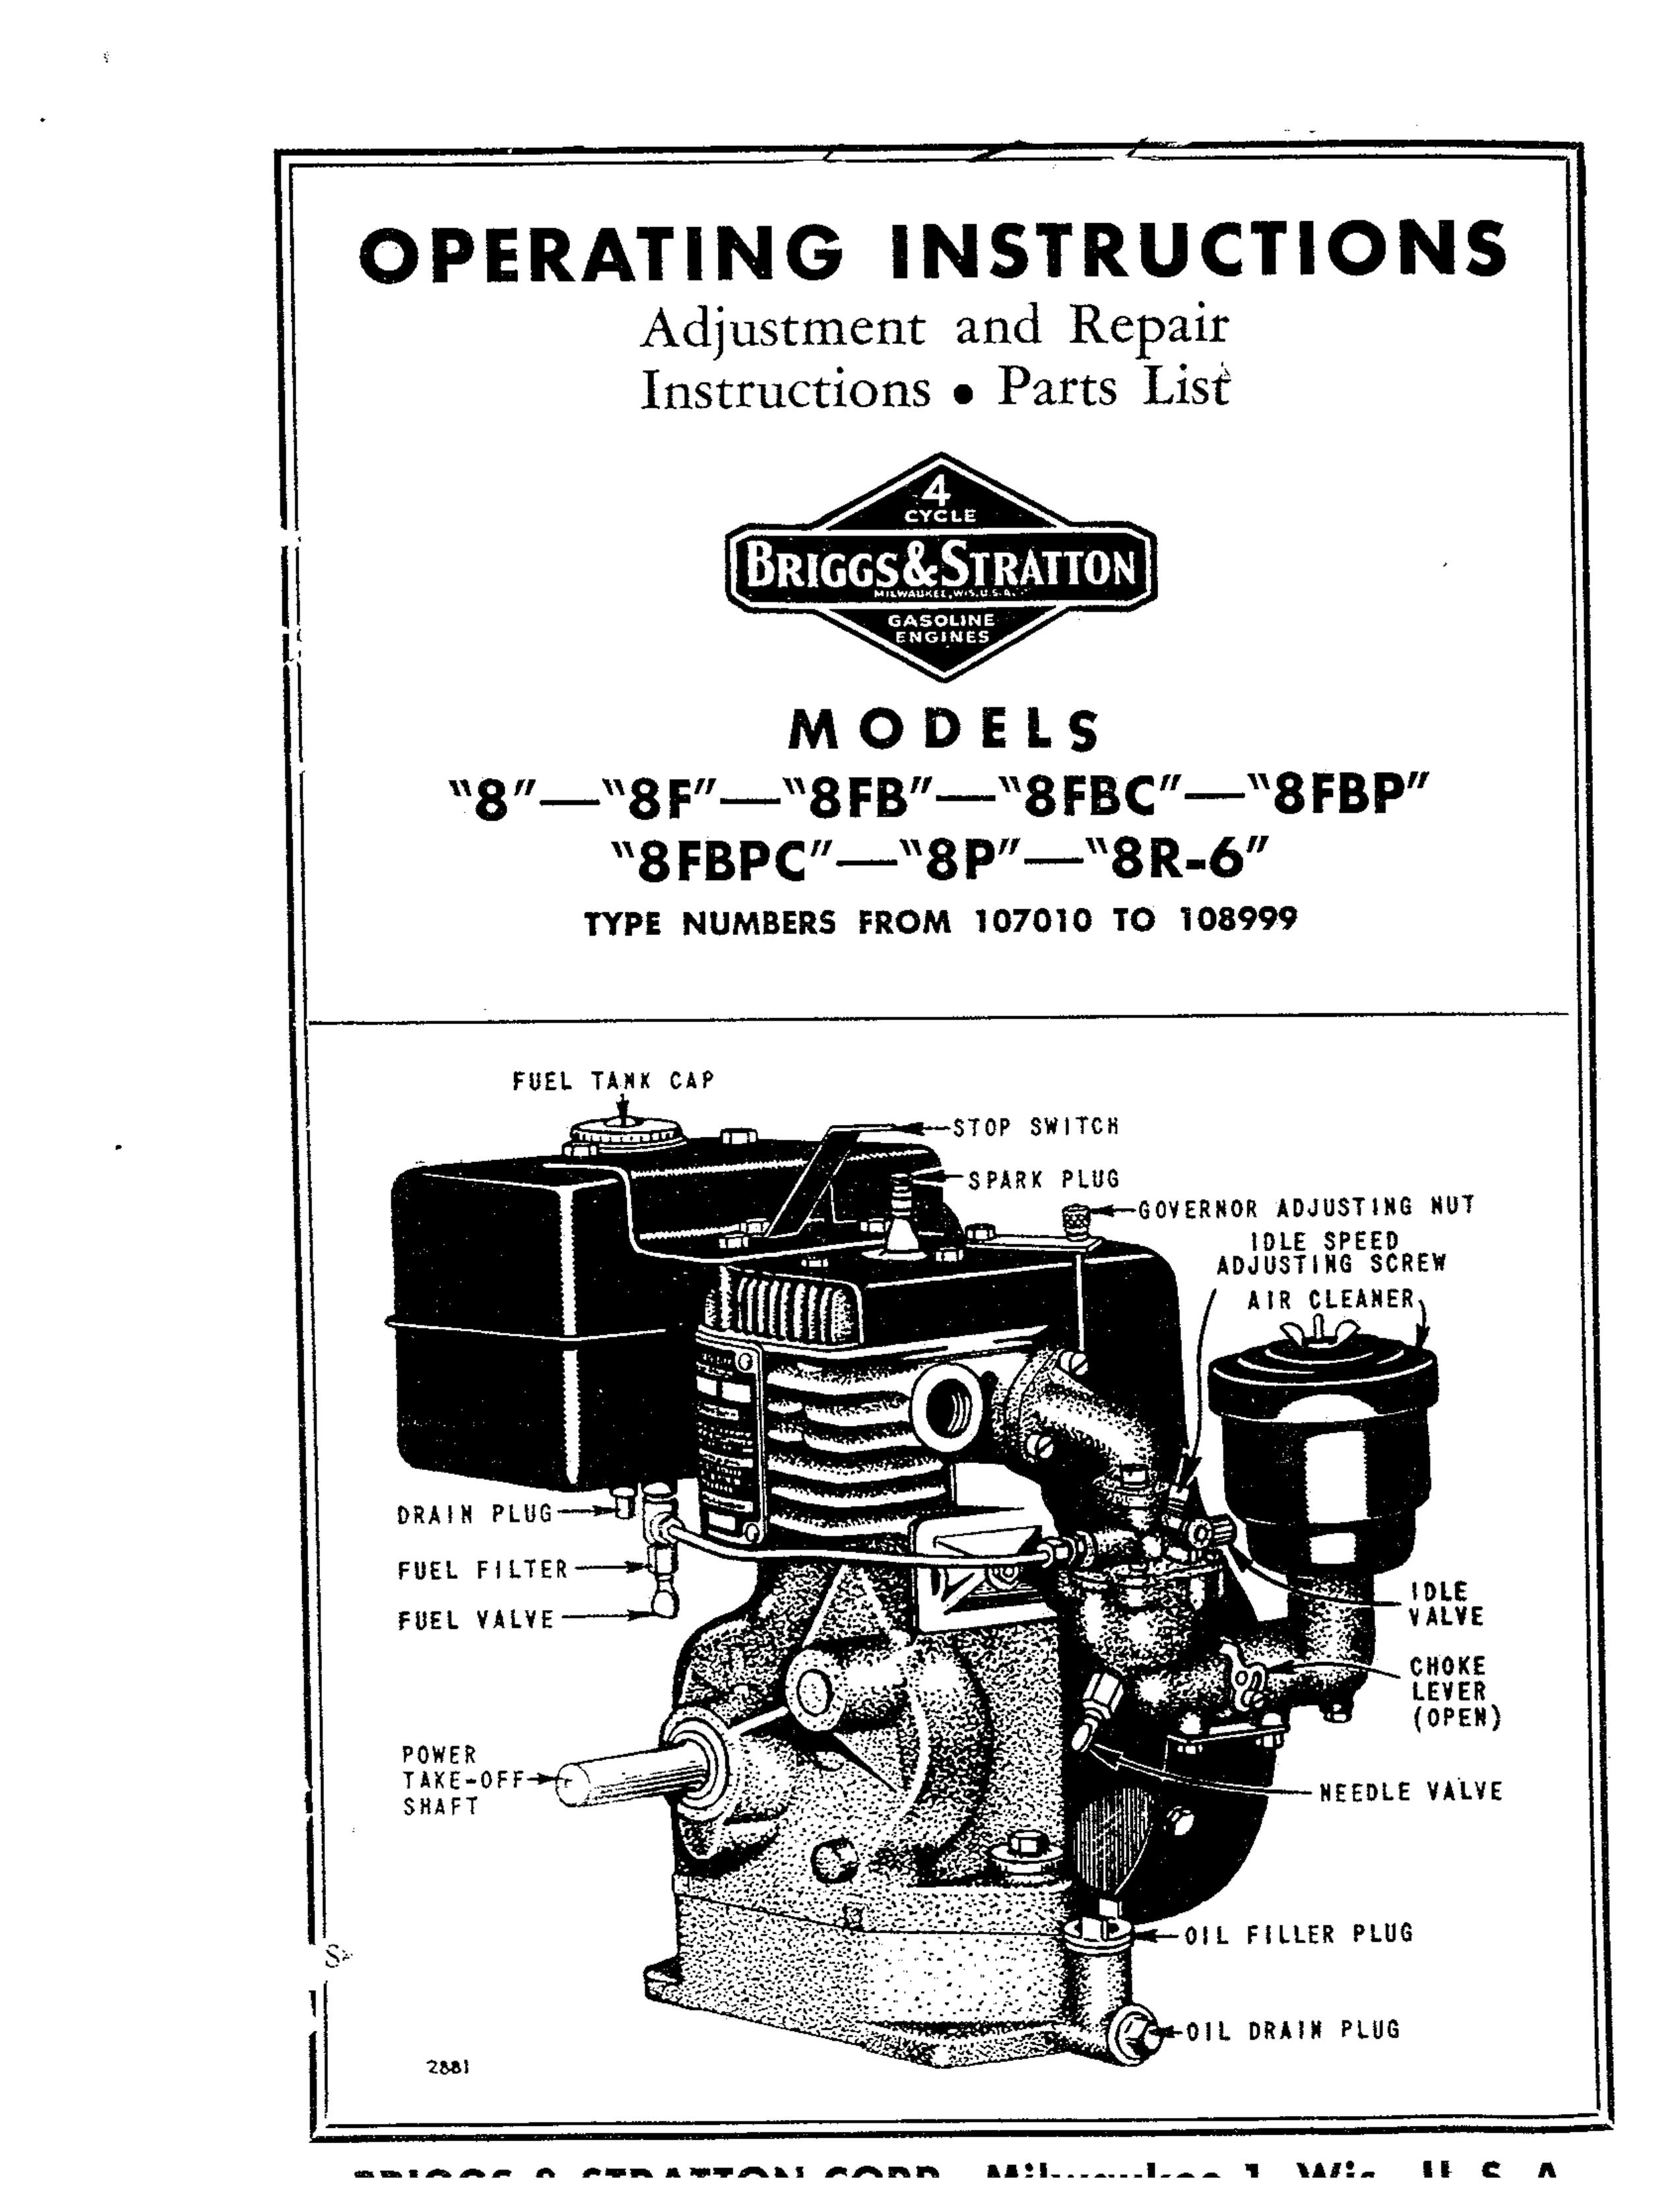 Briggs & Stratton 8-P Log Splitter User Manual